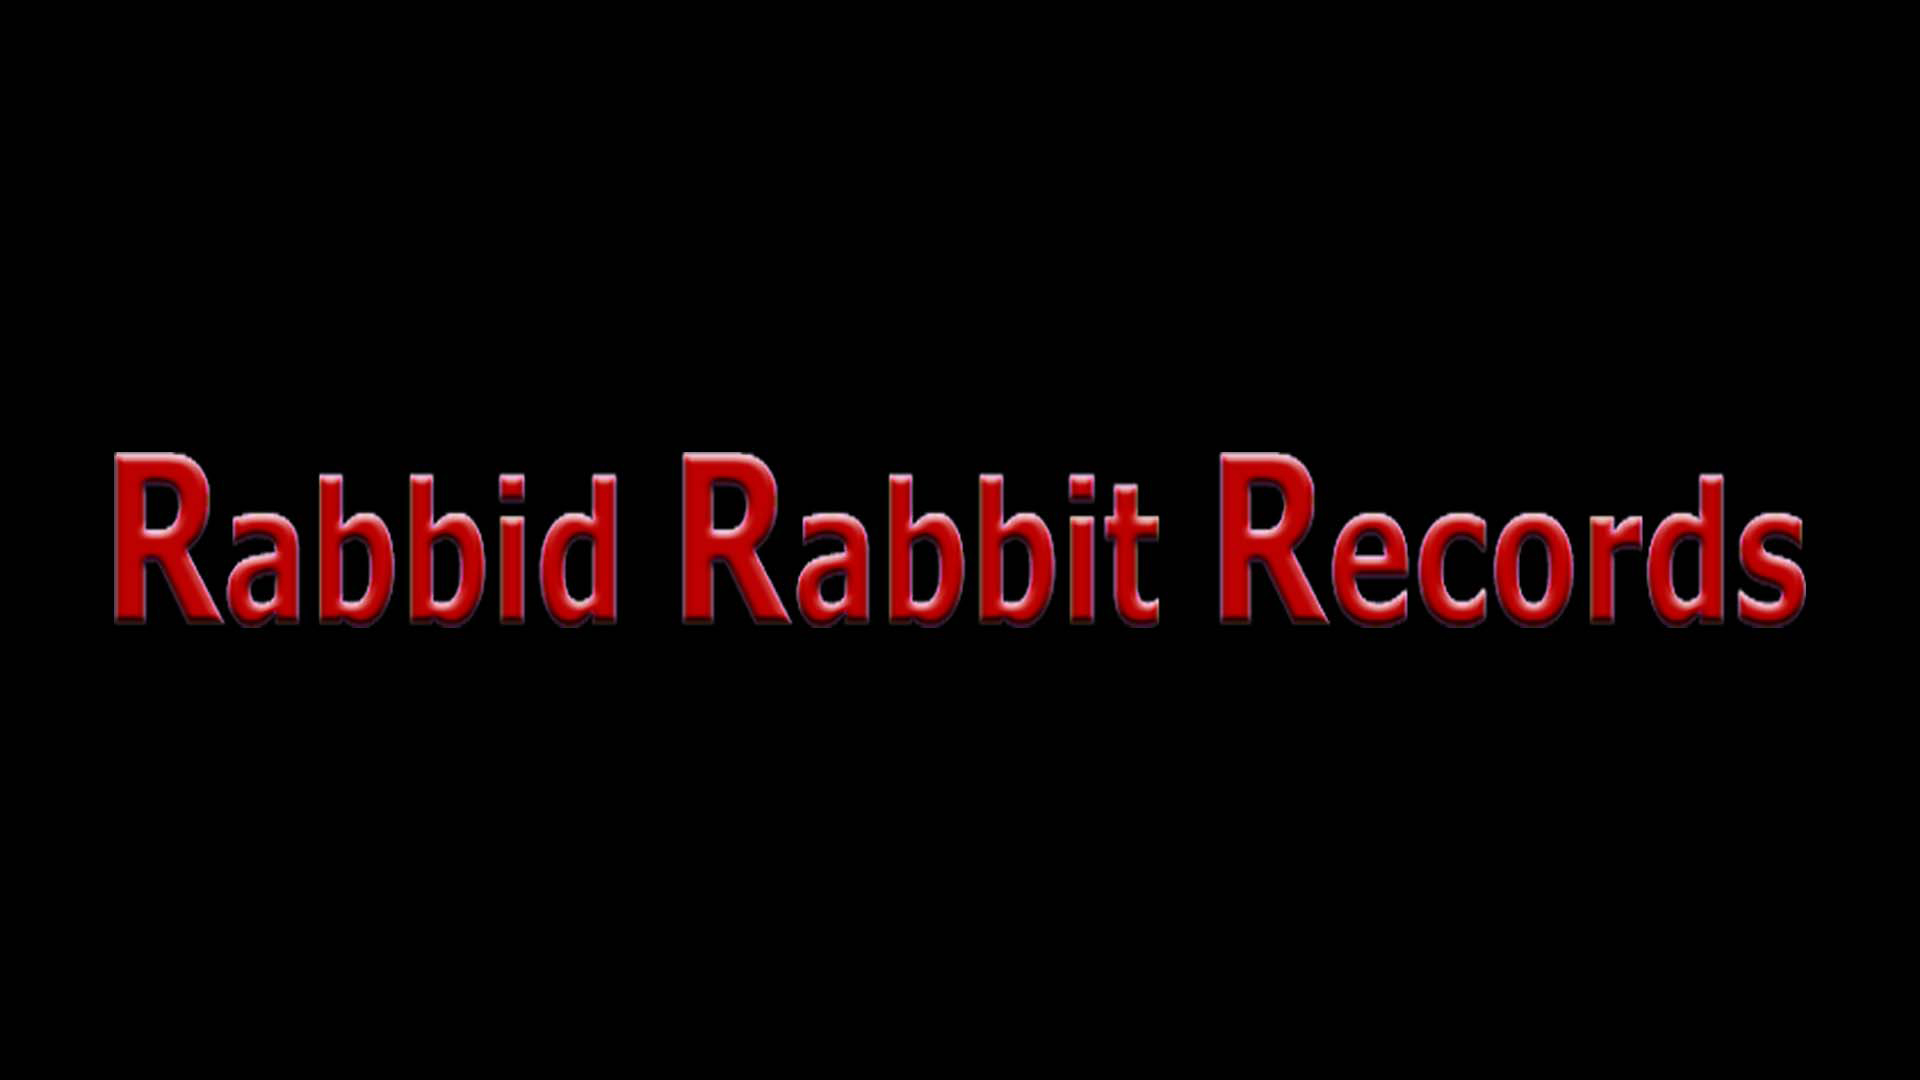 Rabbid Rabbit Records' Upcoming Compilation